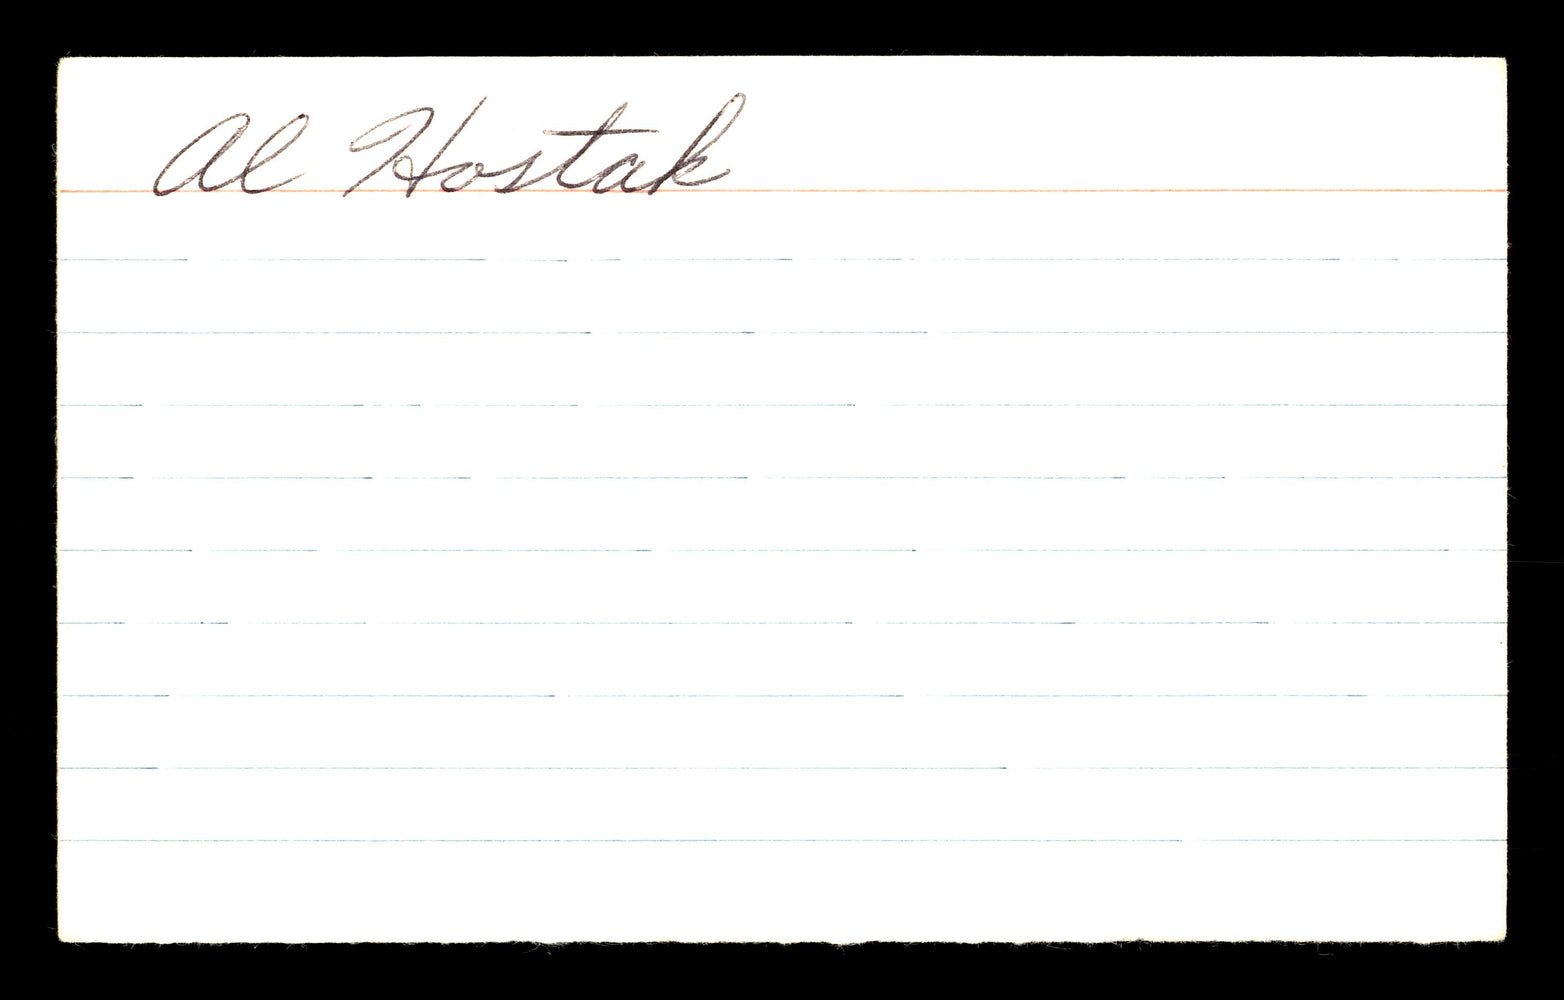 Al Hostak Autographed 3x5 Index Card Middleweight Champ SKU #179729 - RSA